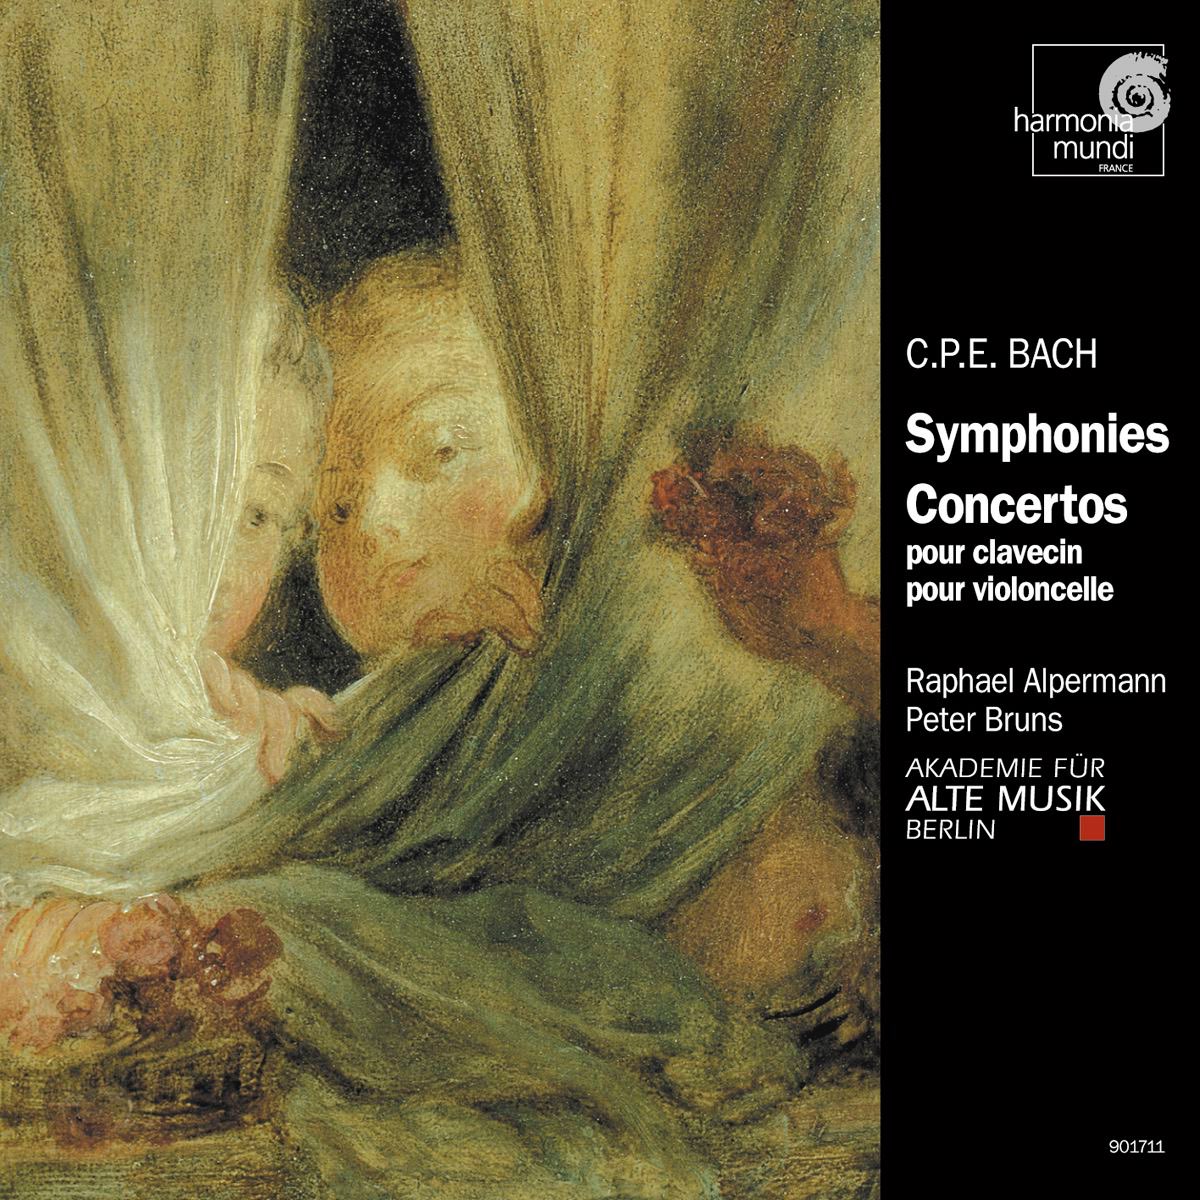 ‎C.P.E. Bach: Symphonies & Concertos by Akademie für Alte Musik Berlin ...